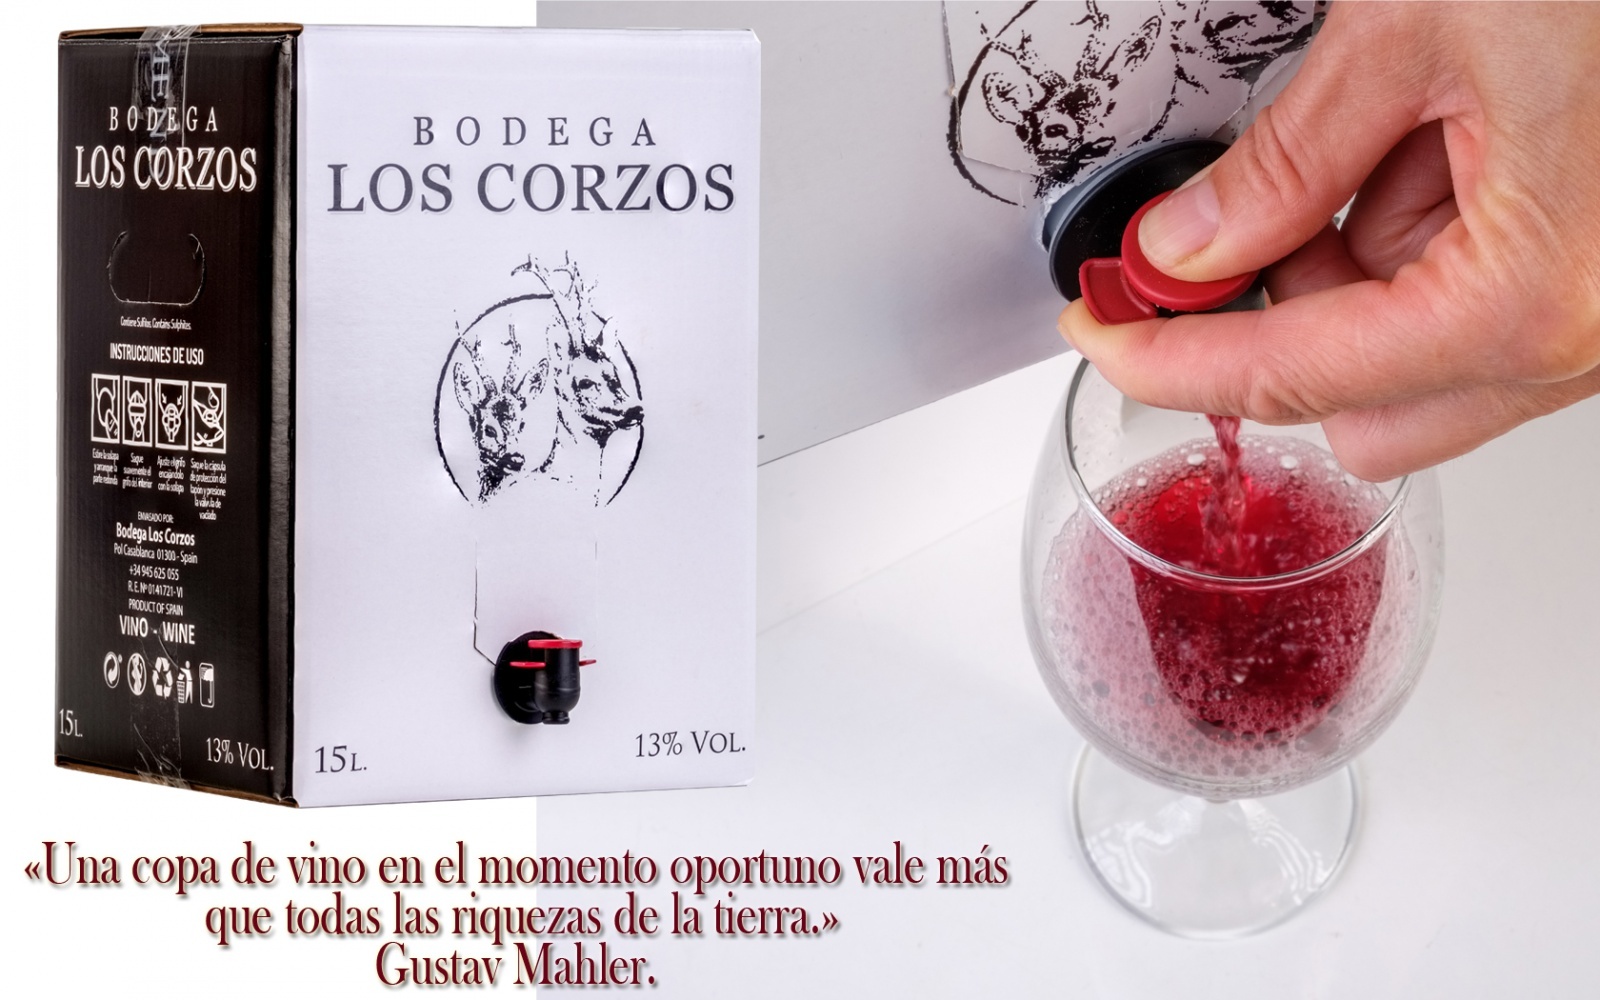 Bag in Box Vino tinto Bodegas Los Corzos